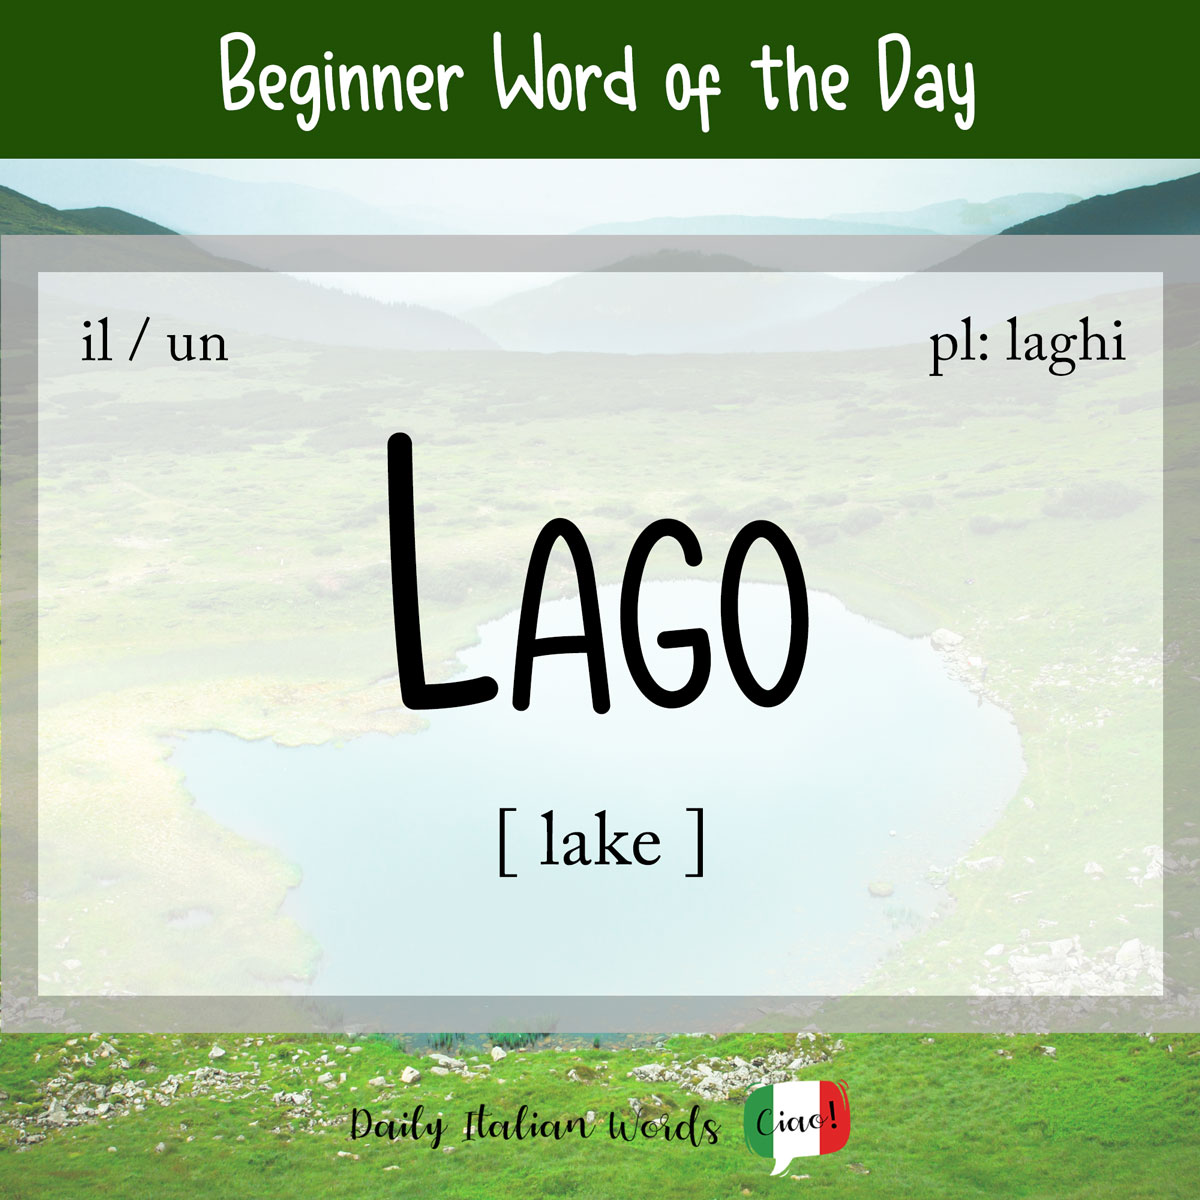 italian word lago